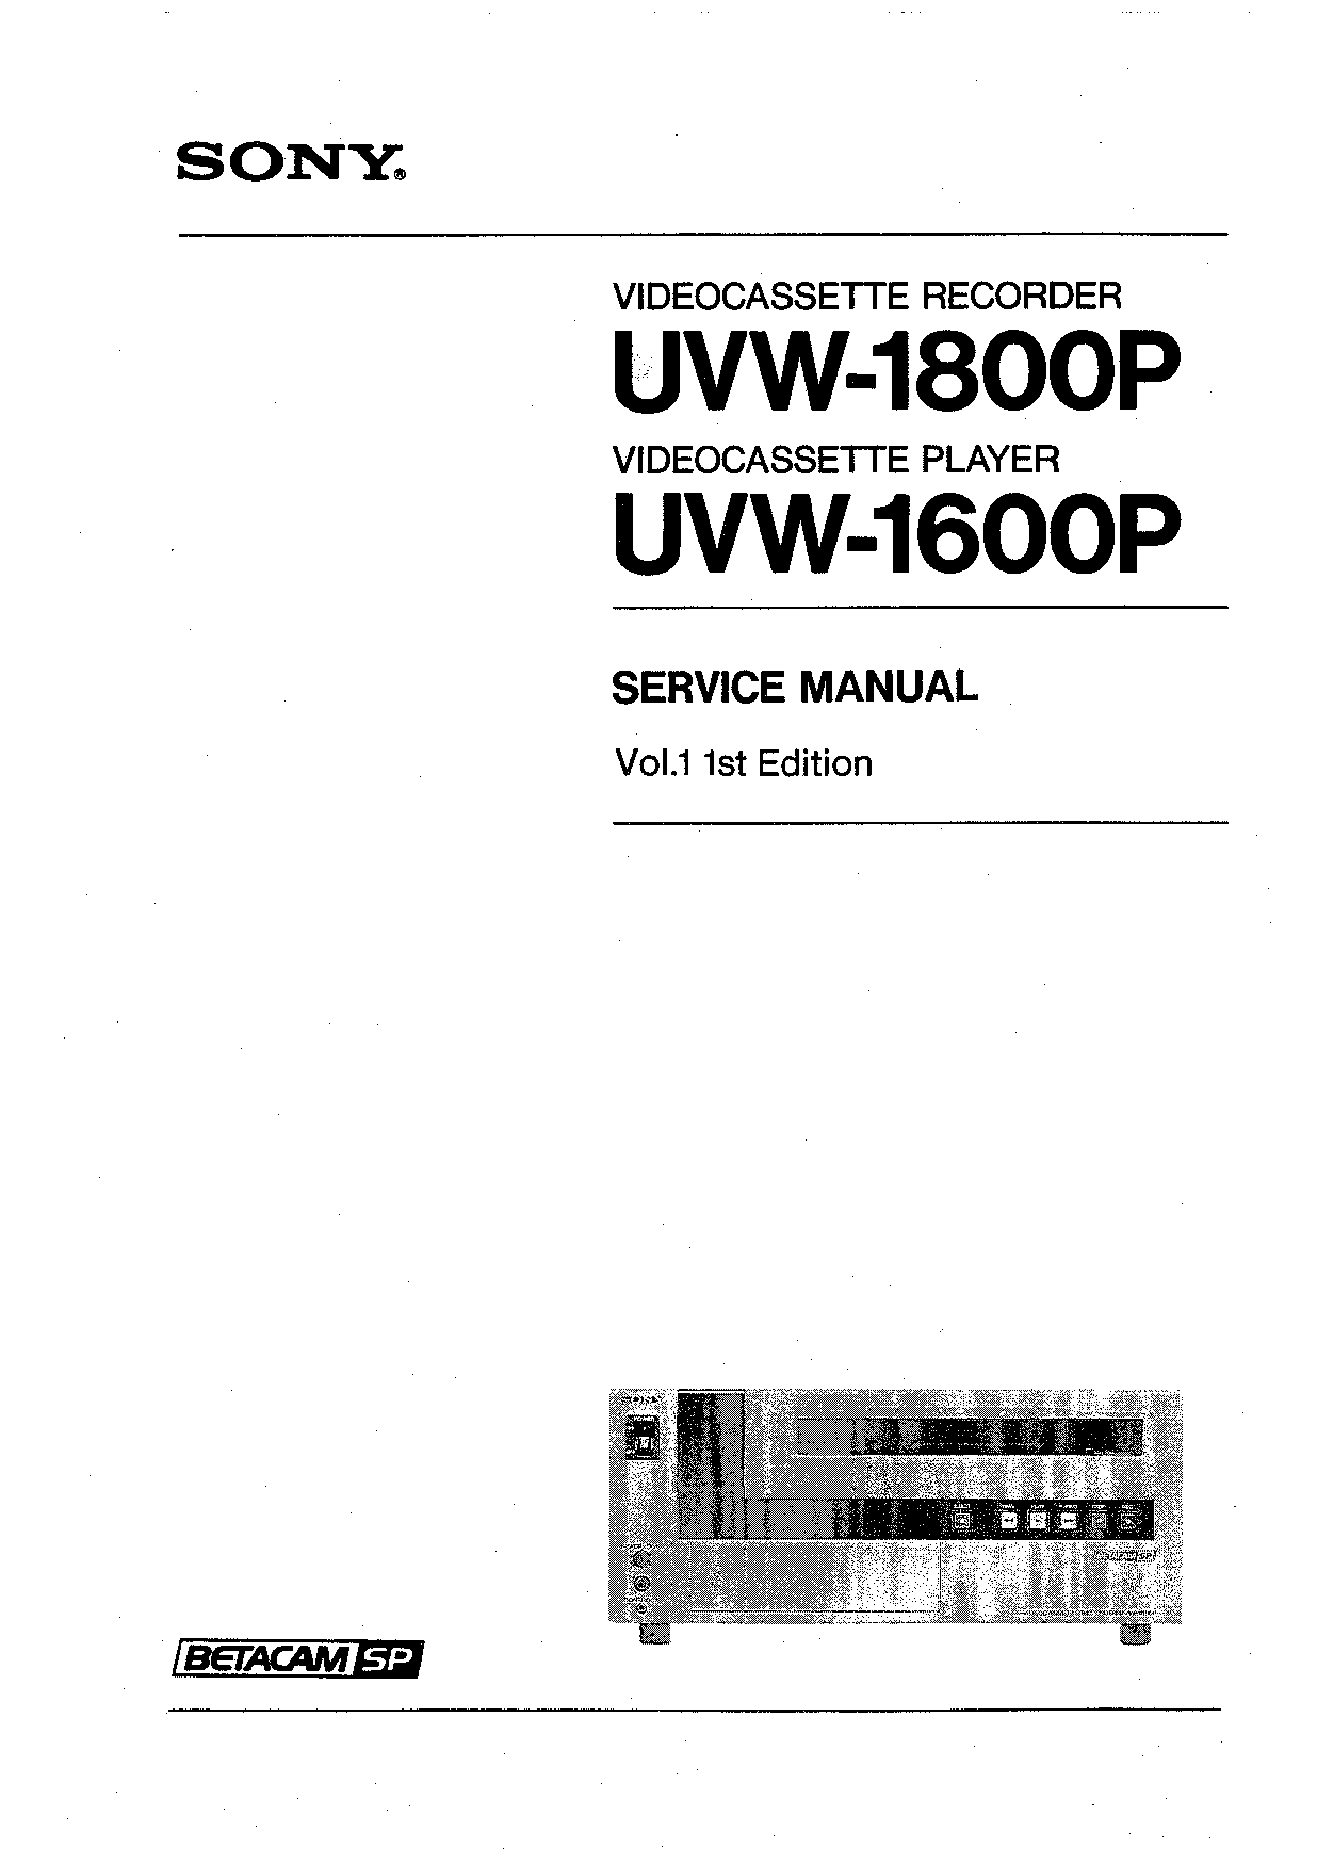 uvw-1800-maintenance-manual